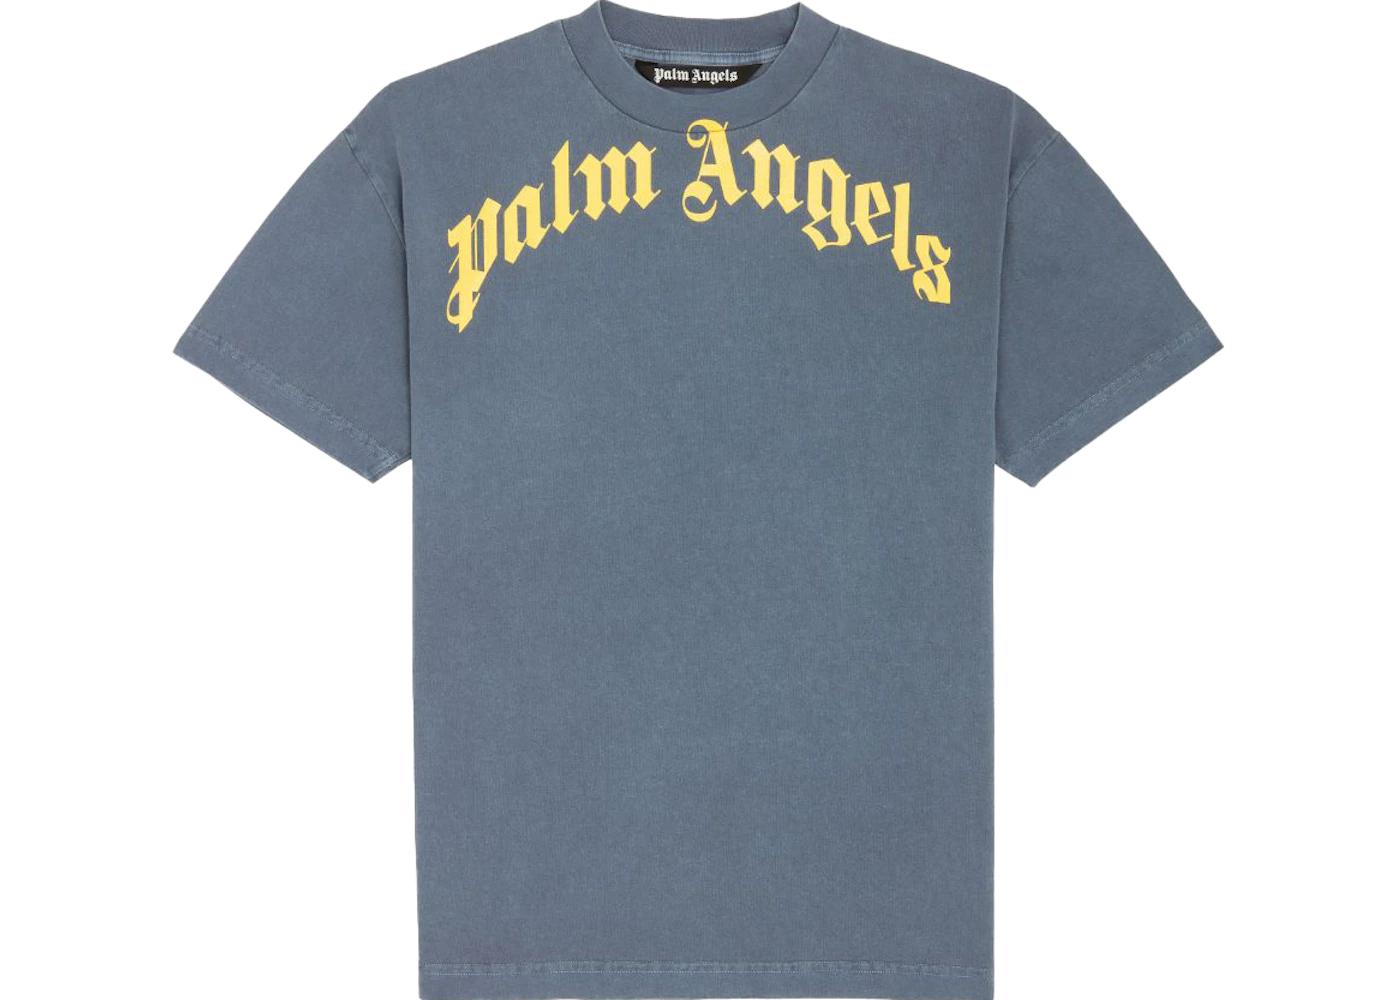 Palm Angels Vintage T-shirt Navy Men's - SS21 - US